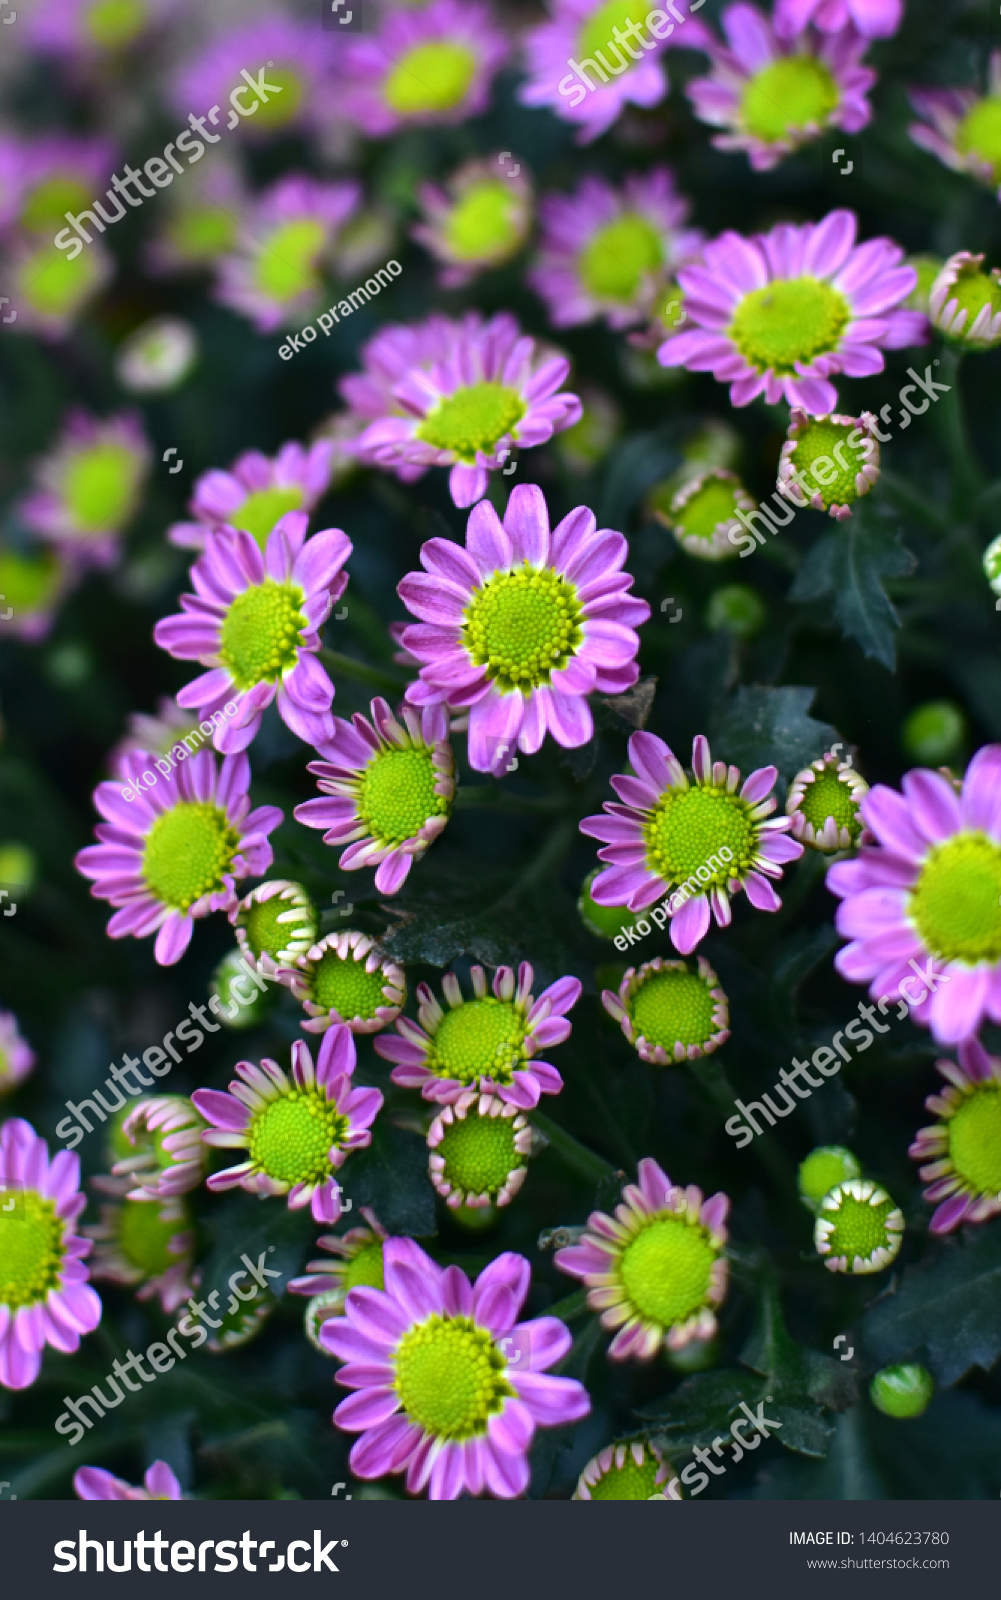 Soft Focus Purple Chrysanthemum Flowers Bloom Stock Photo 1404623780 ...